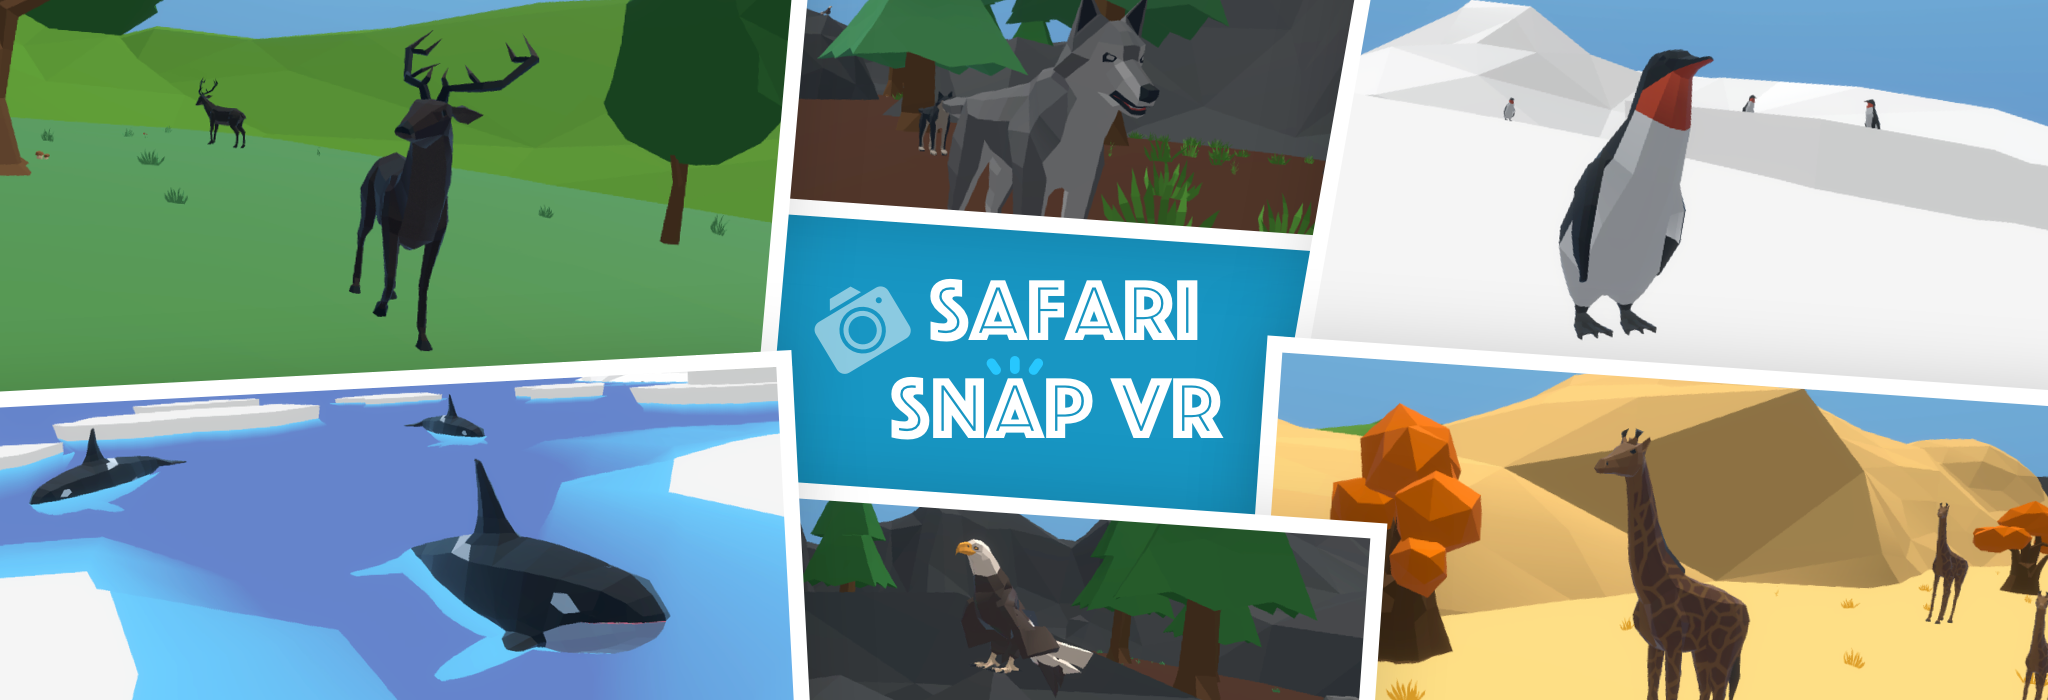 Safari Snap VR